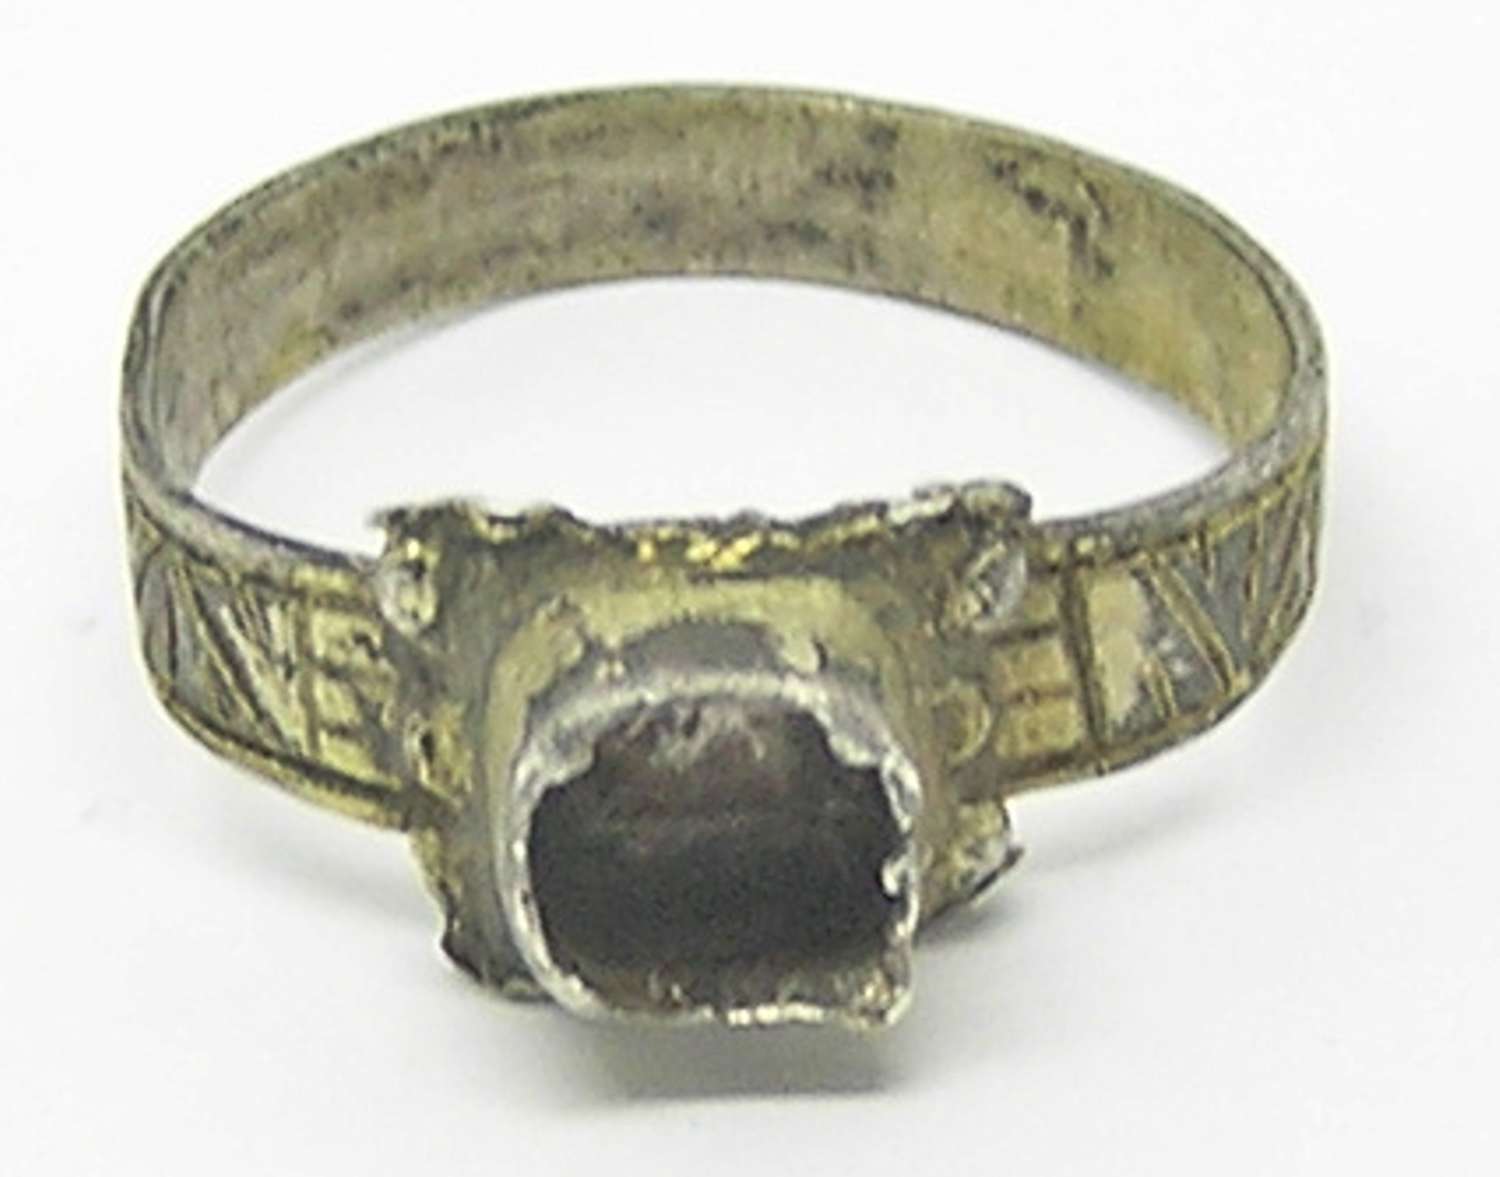 Medieval silver-gilt finger ring